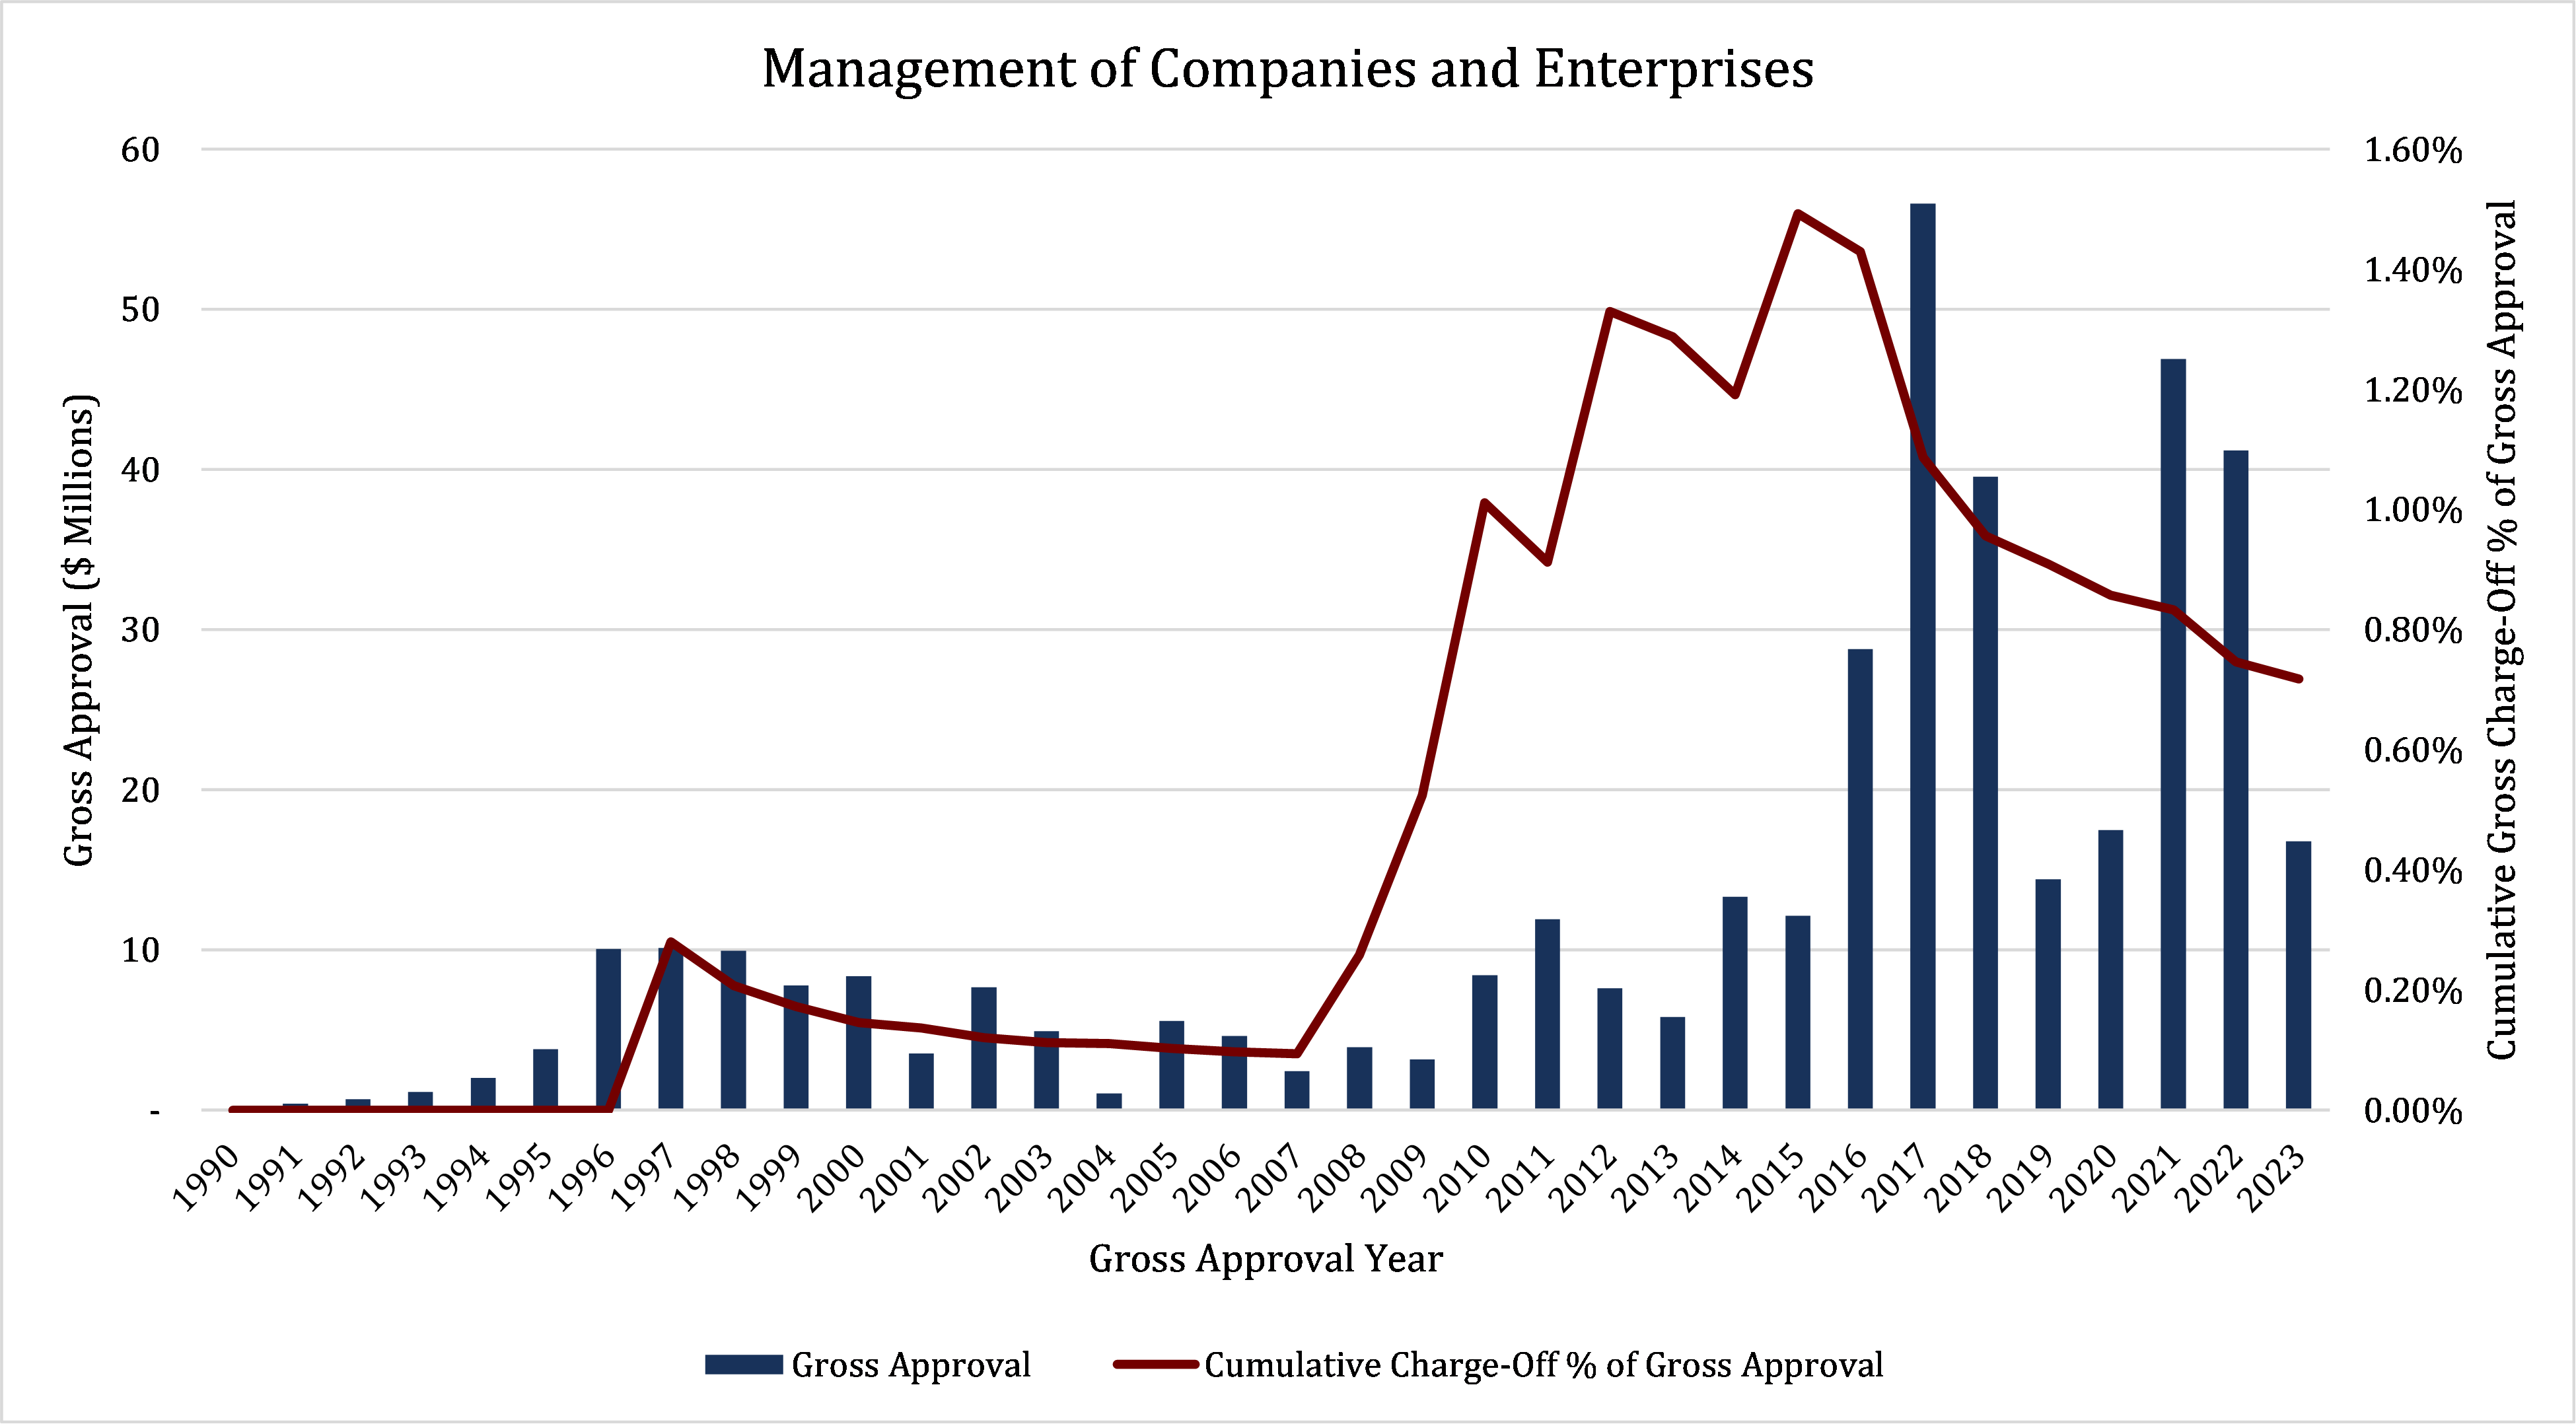 Management of companies and enterprises graph